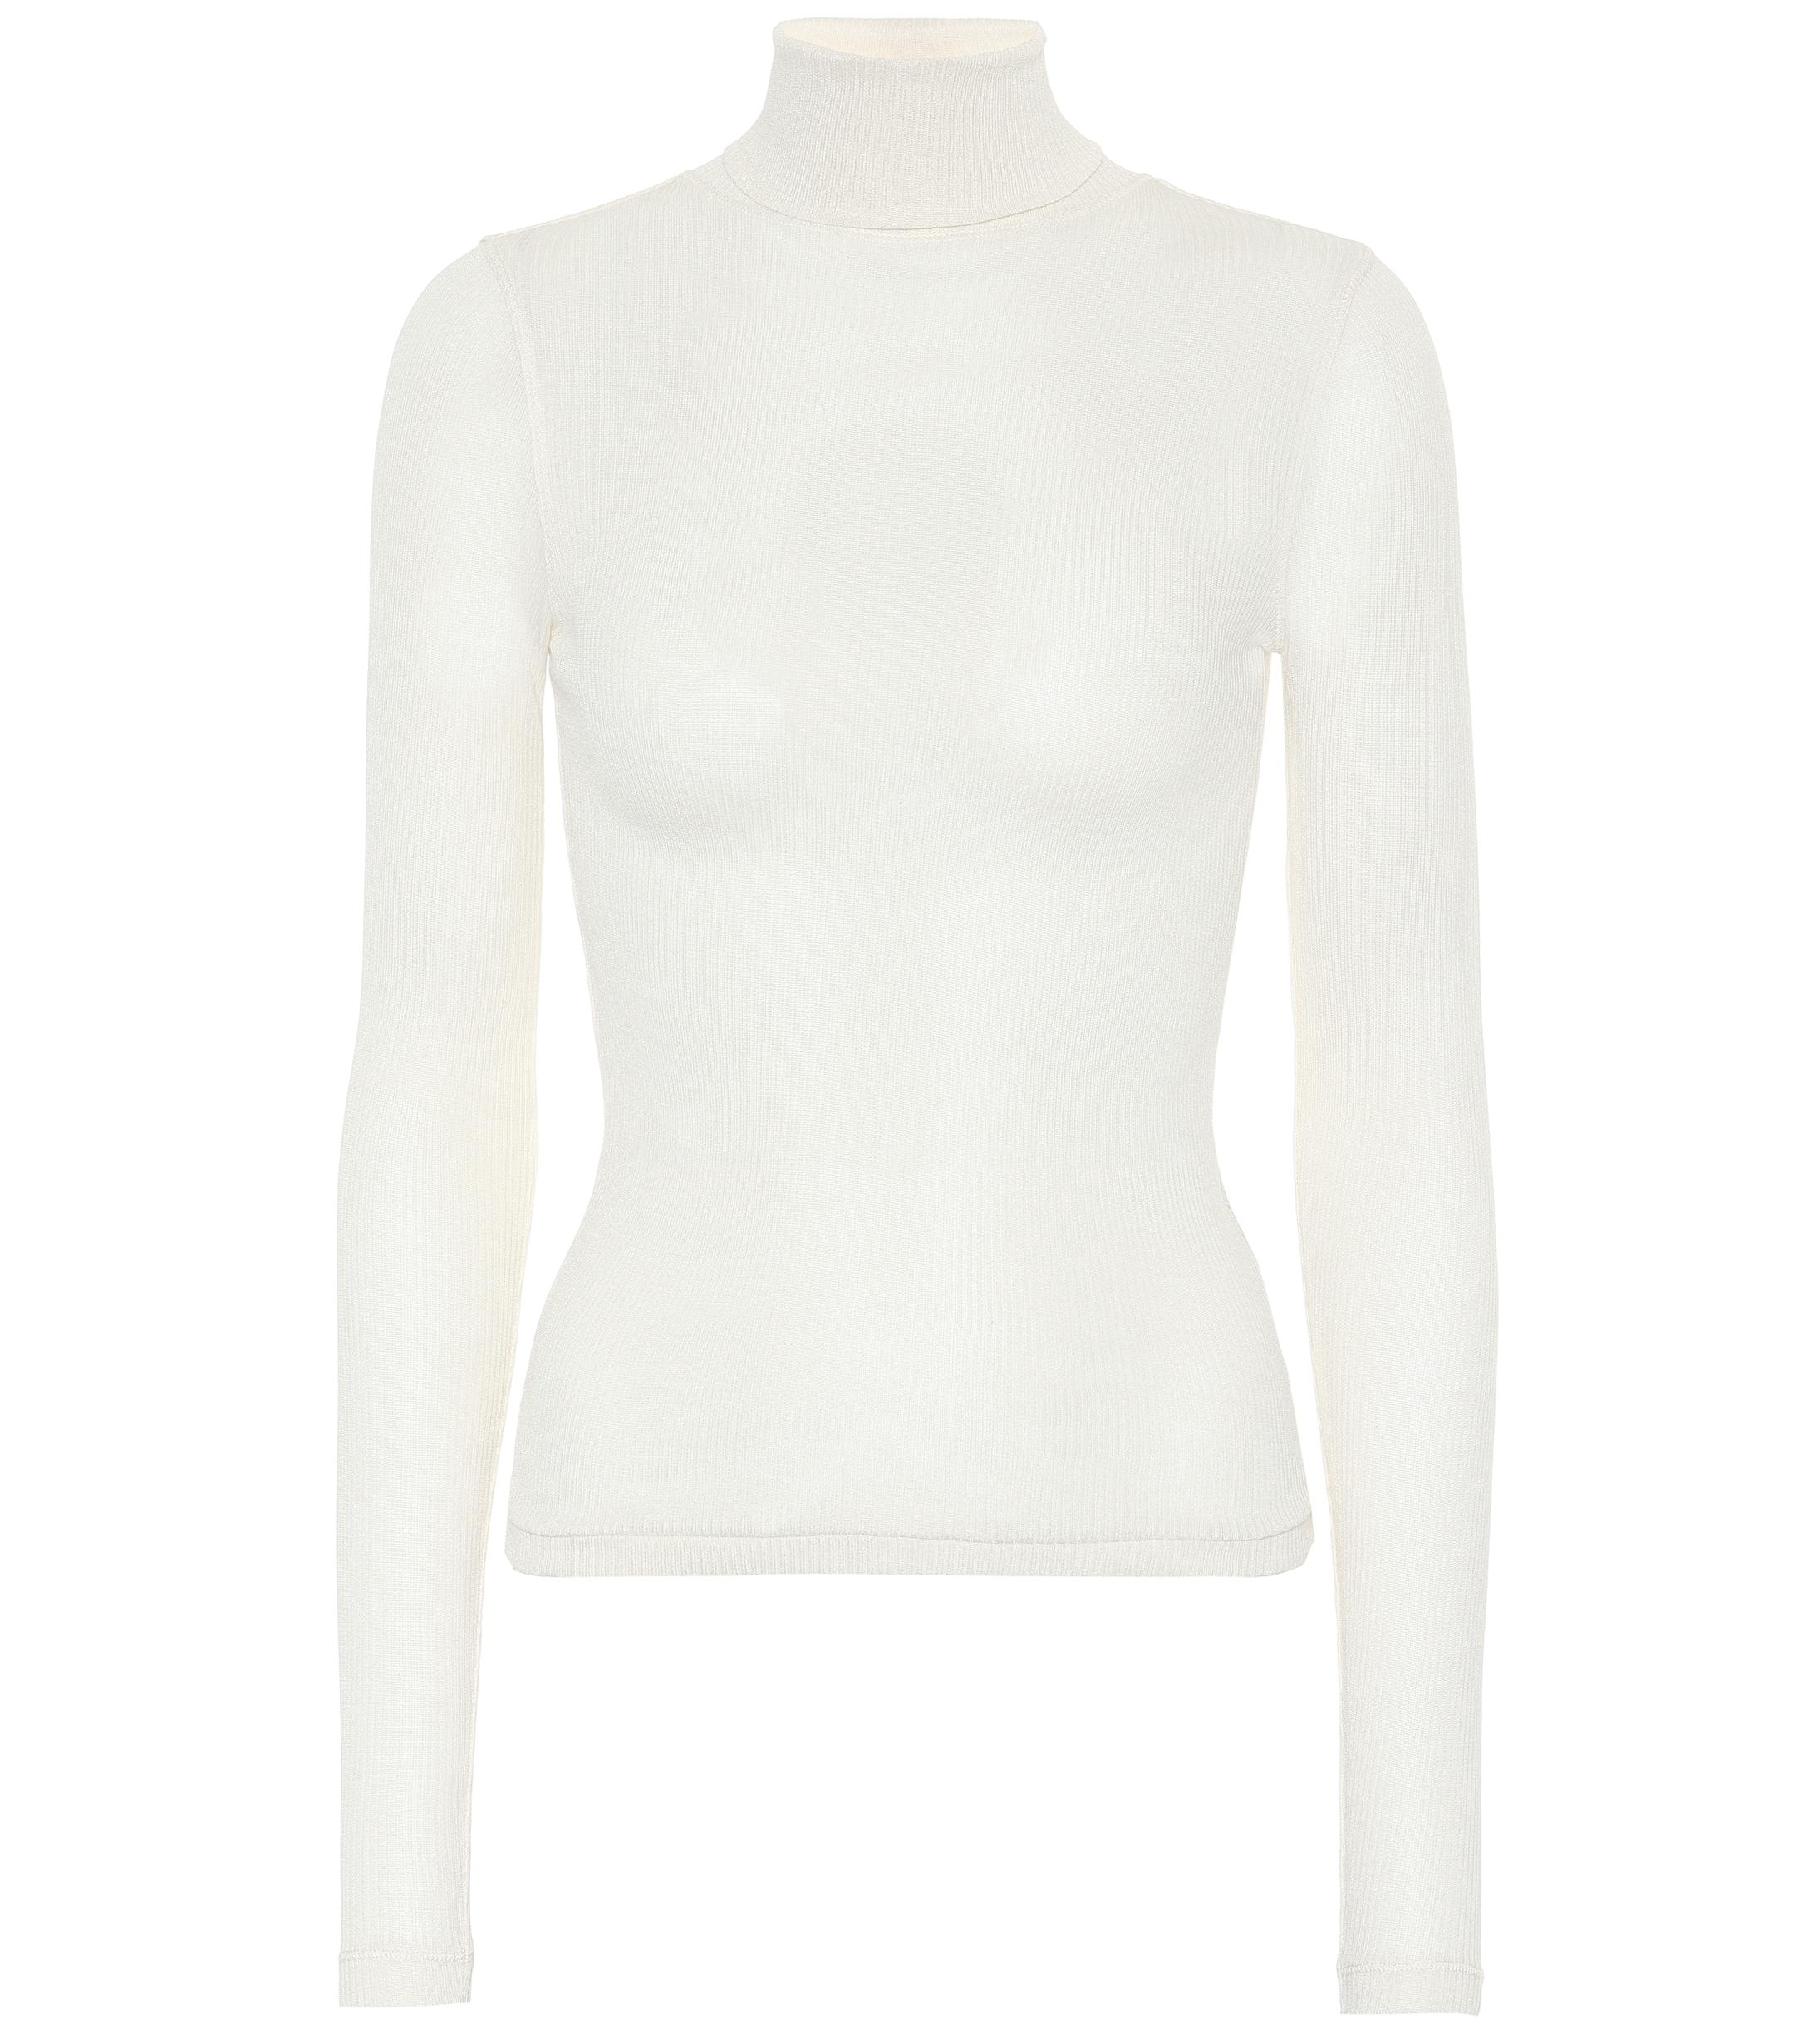 AMI Cotton Turtleneck Sweater in White - Lyst